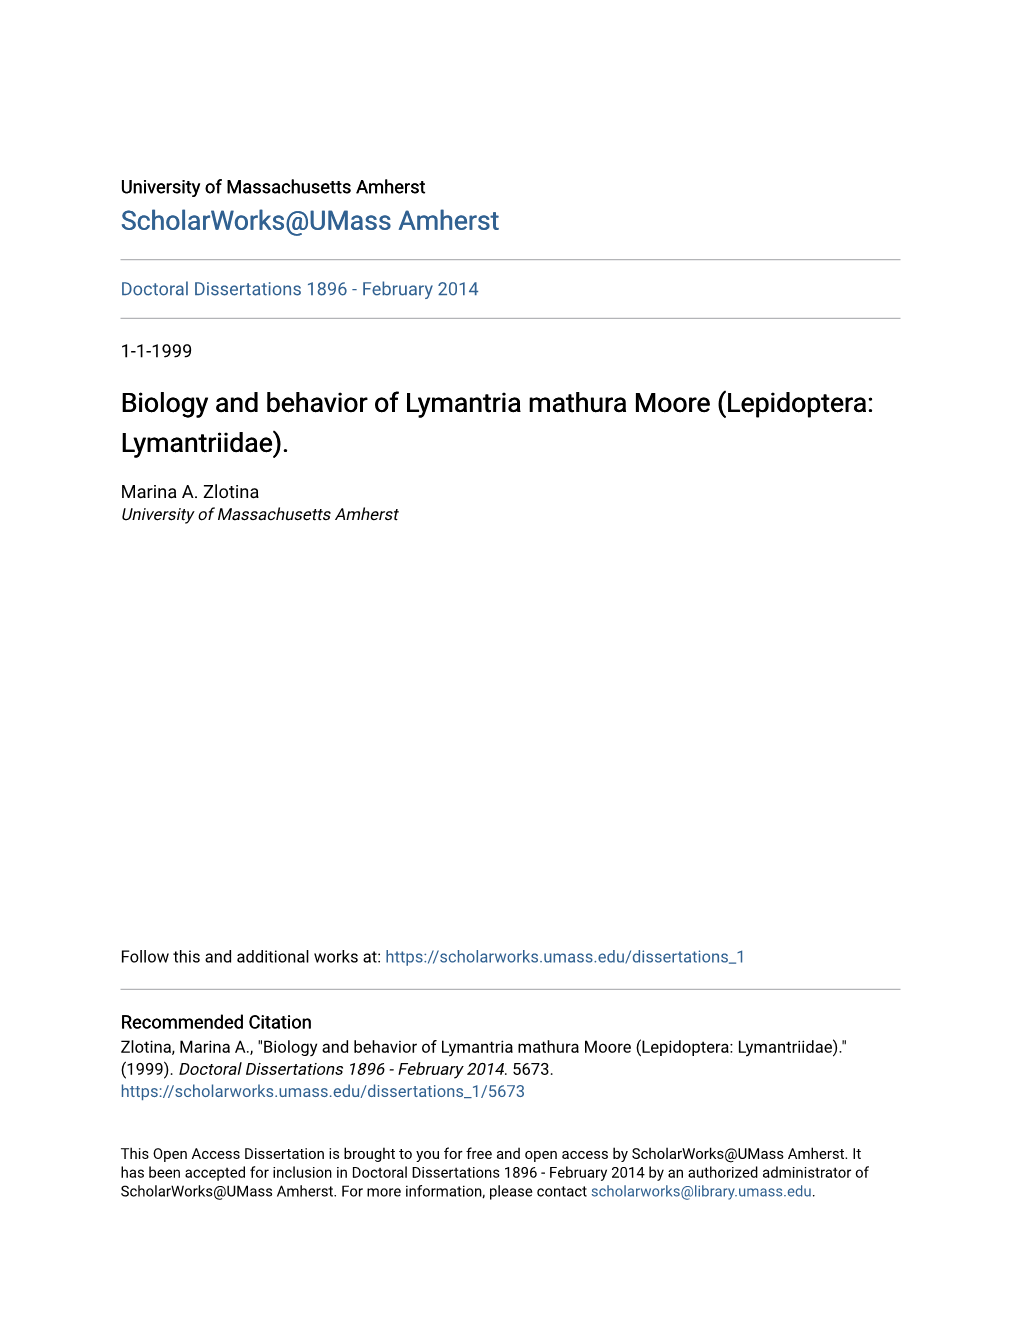 Biology and Behavior of Lymantria Mathura Moore (Lepidoptera: Lymantriidae)